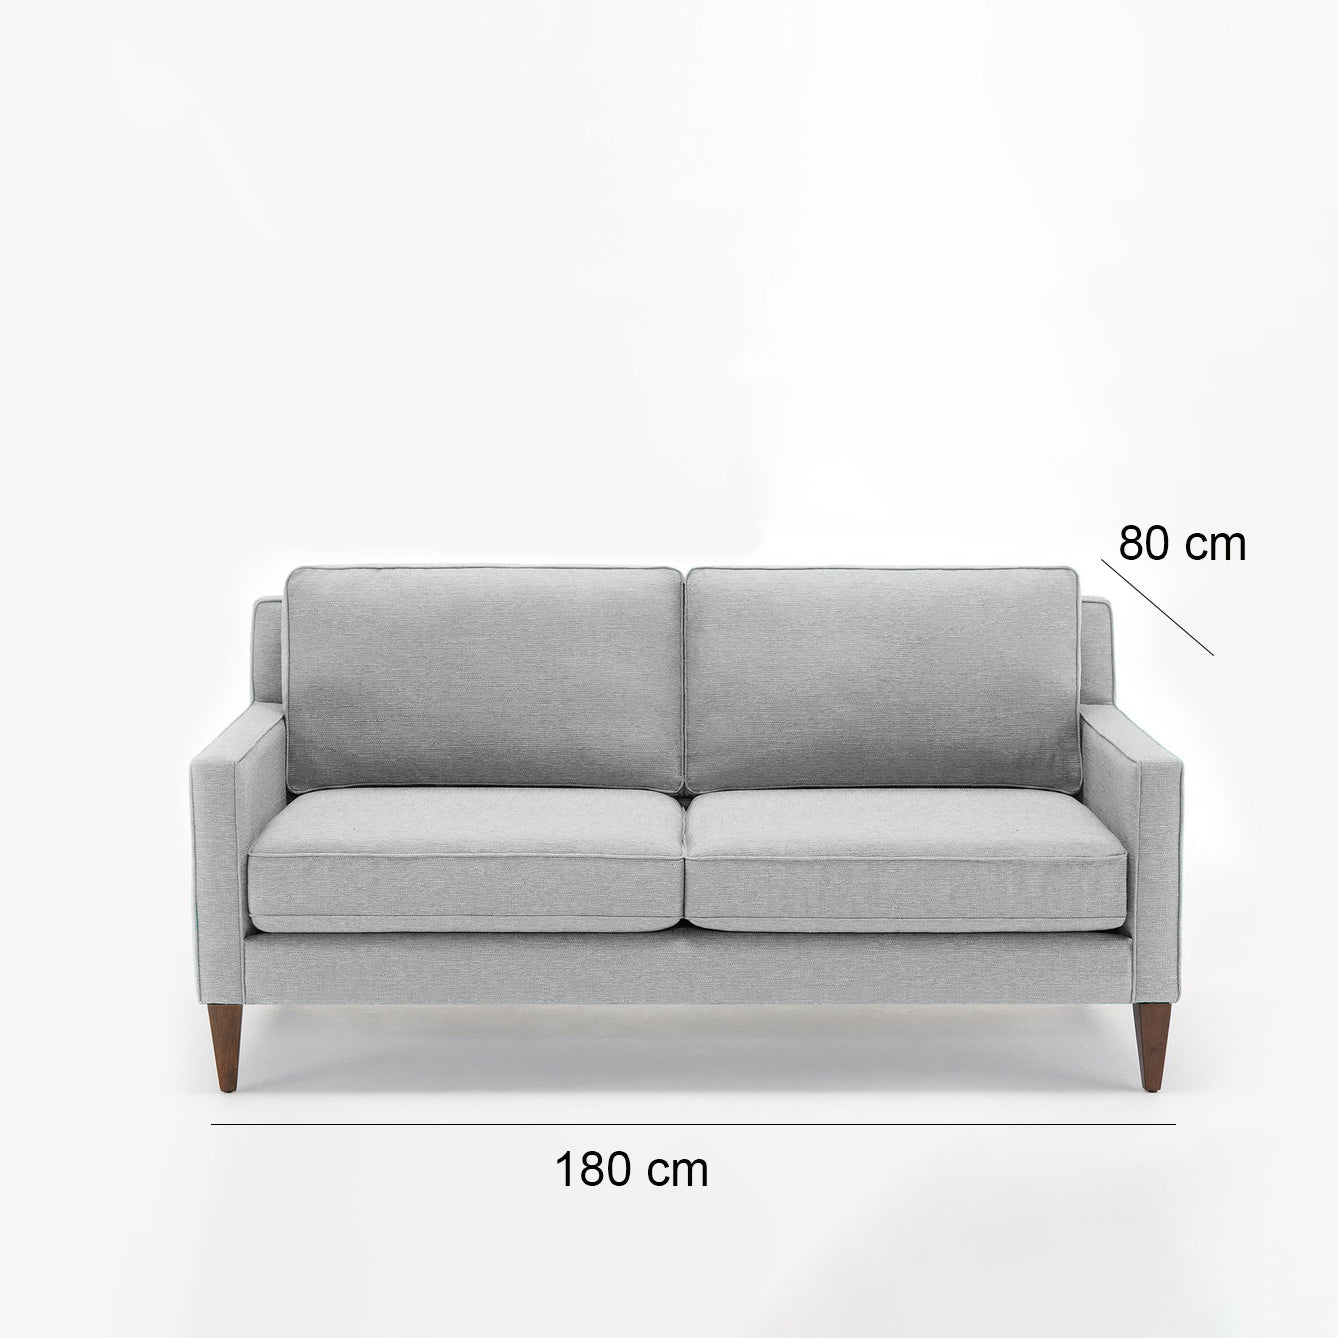 Modern sofa 80 x 180 cm - FUD1001